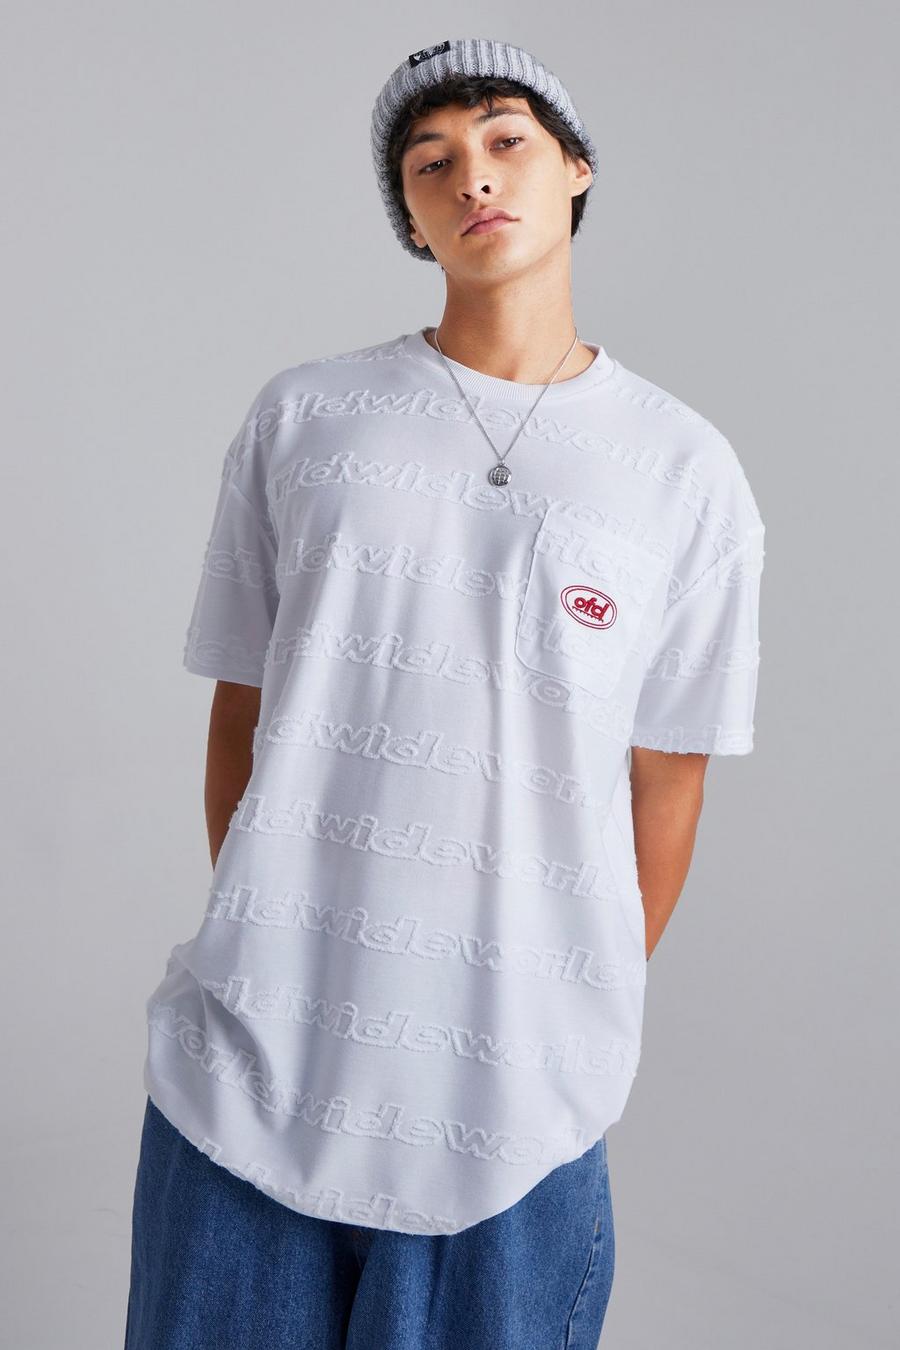 Camiseta oversize de felpa con estampado Worldwide, White blanco